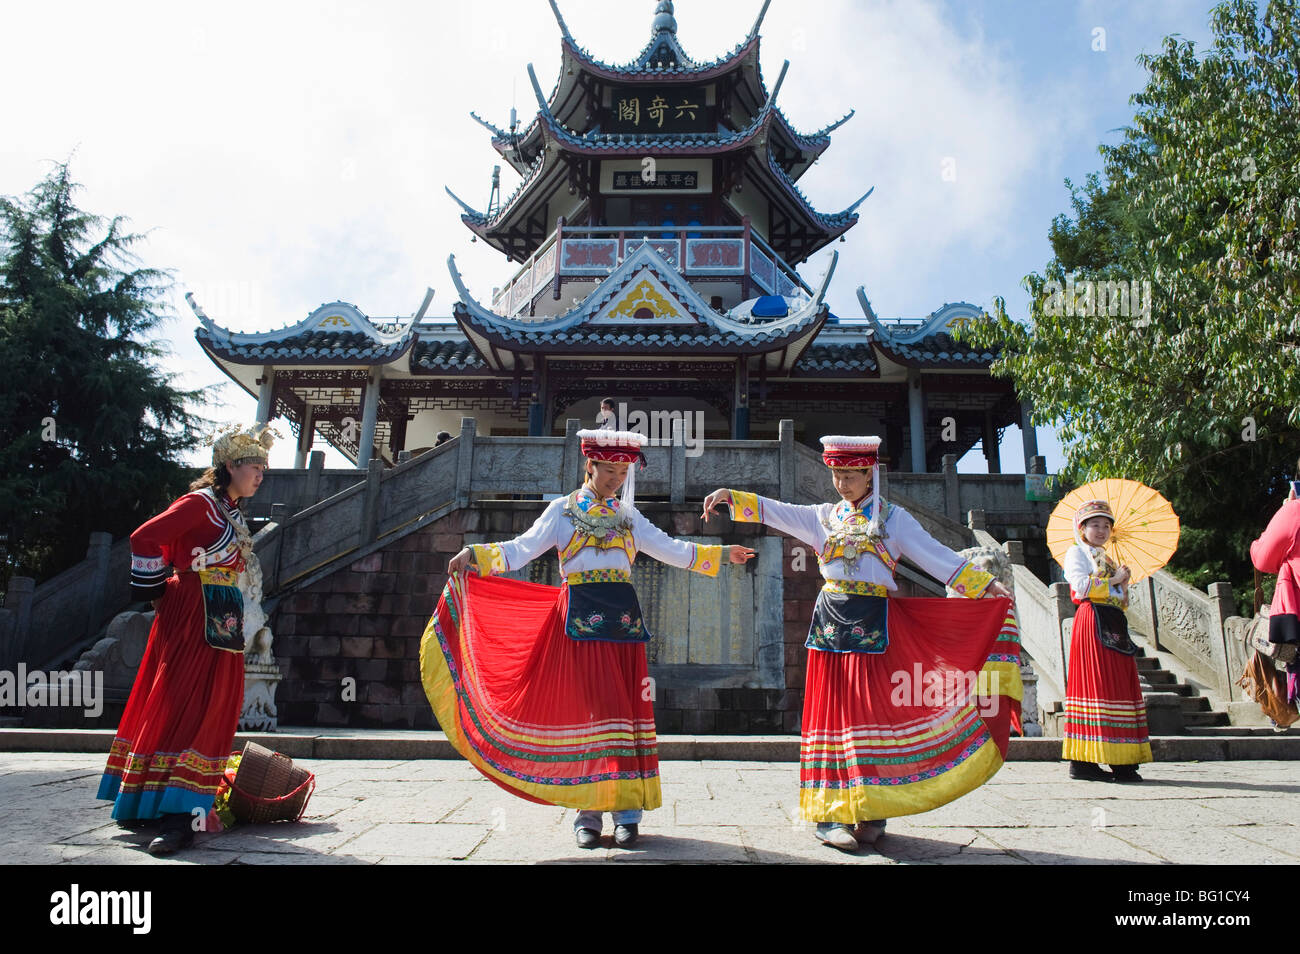 Girls dancing in traditional costume, Zhangjiajie Forest Park, Wulingyuan Scenic Area, Hunan Province, China, Asia Stock Photo